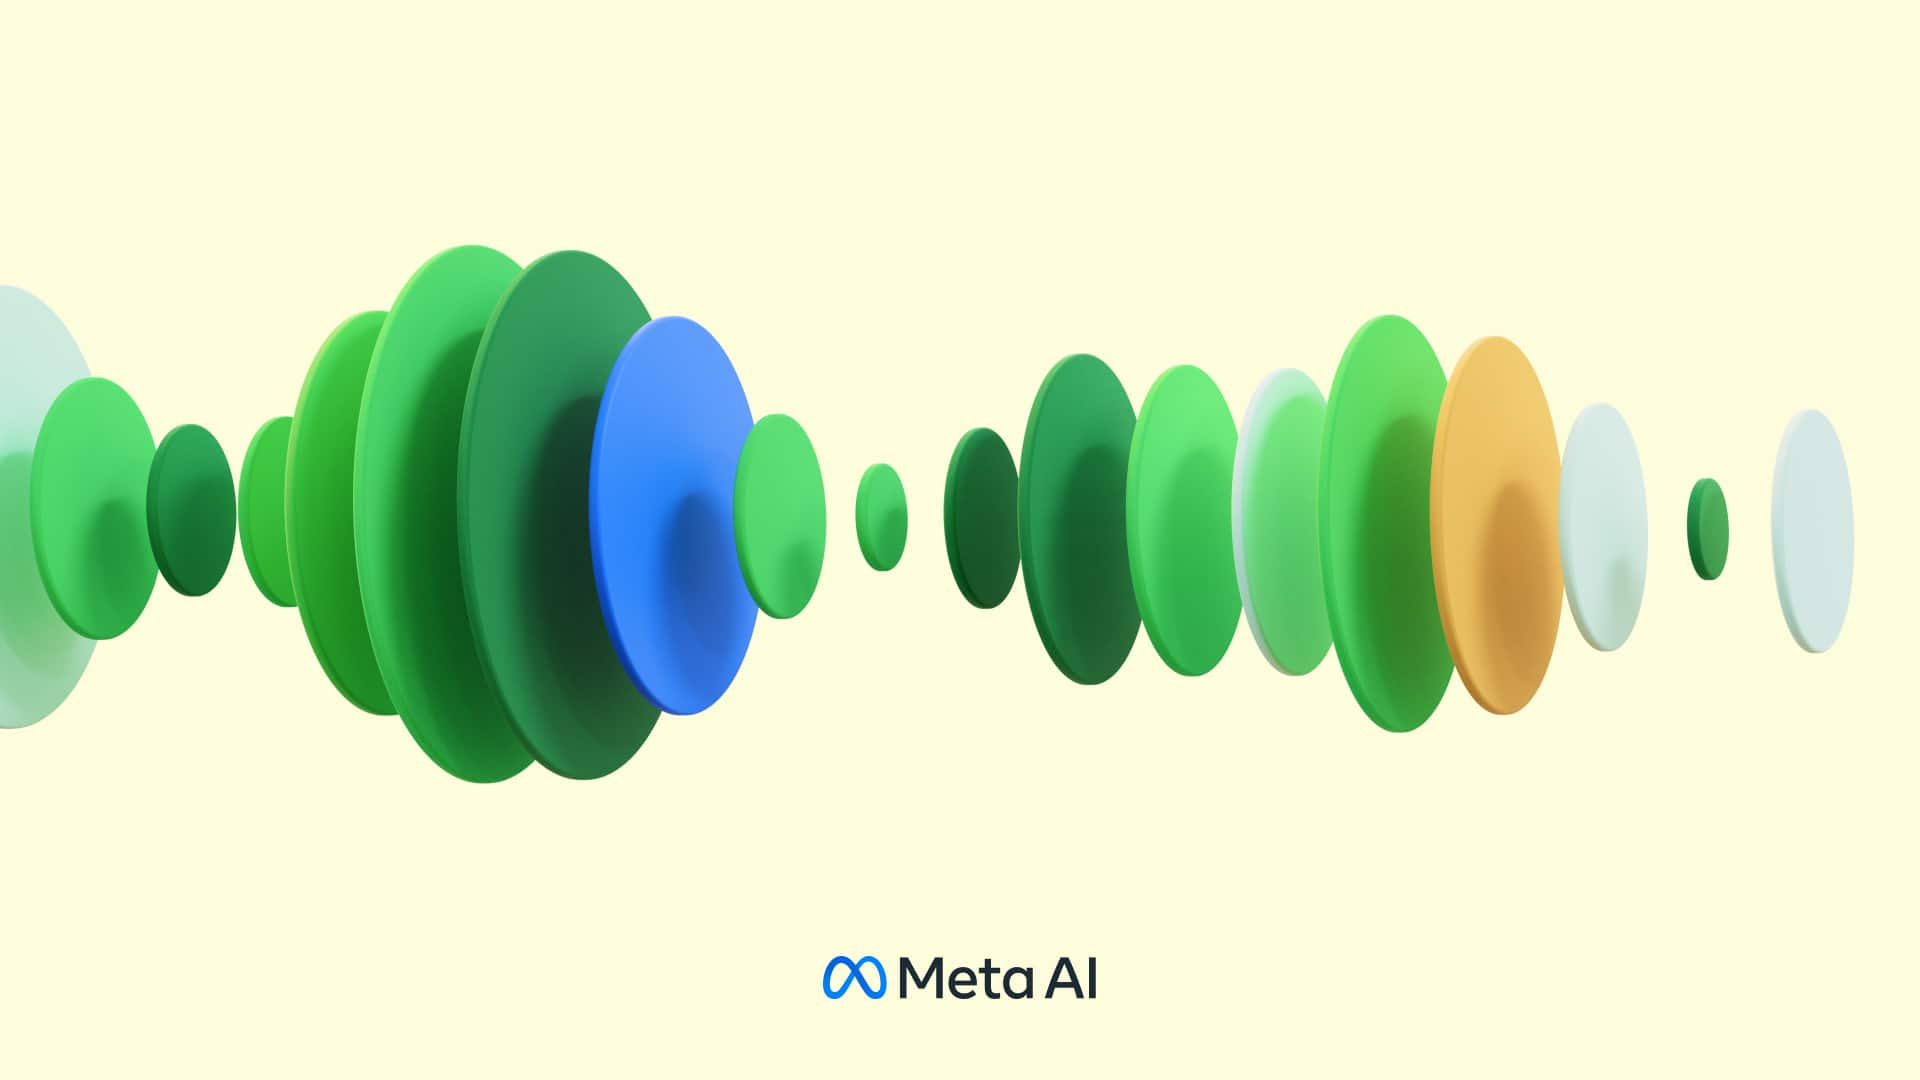 Meet Voicebox, Meta's new AI model for speech generation